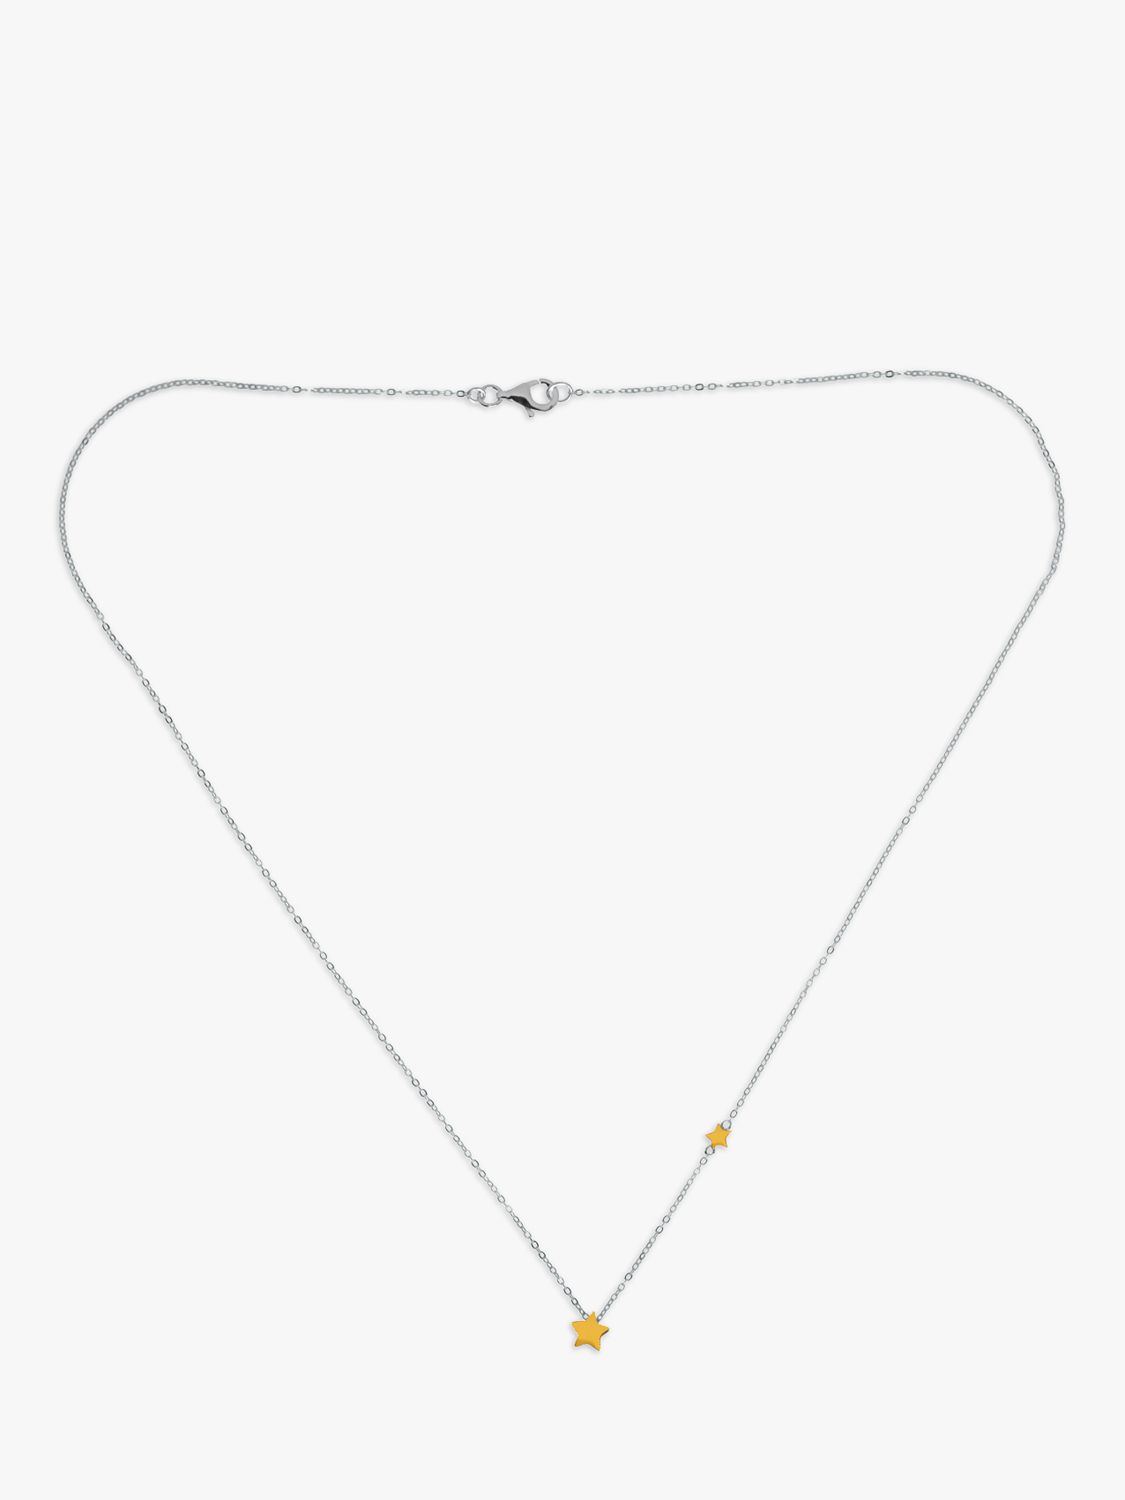 Nina B Tiny Star Chain Necklace, Silver/Gold